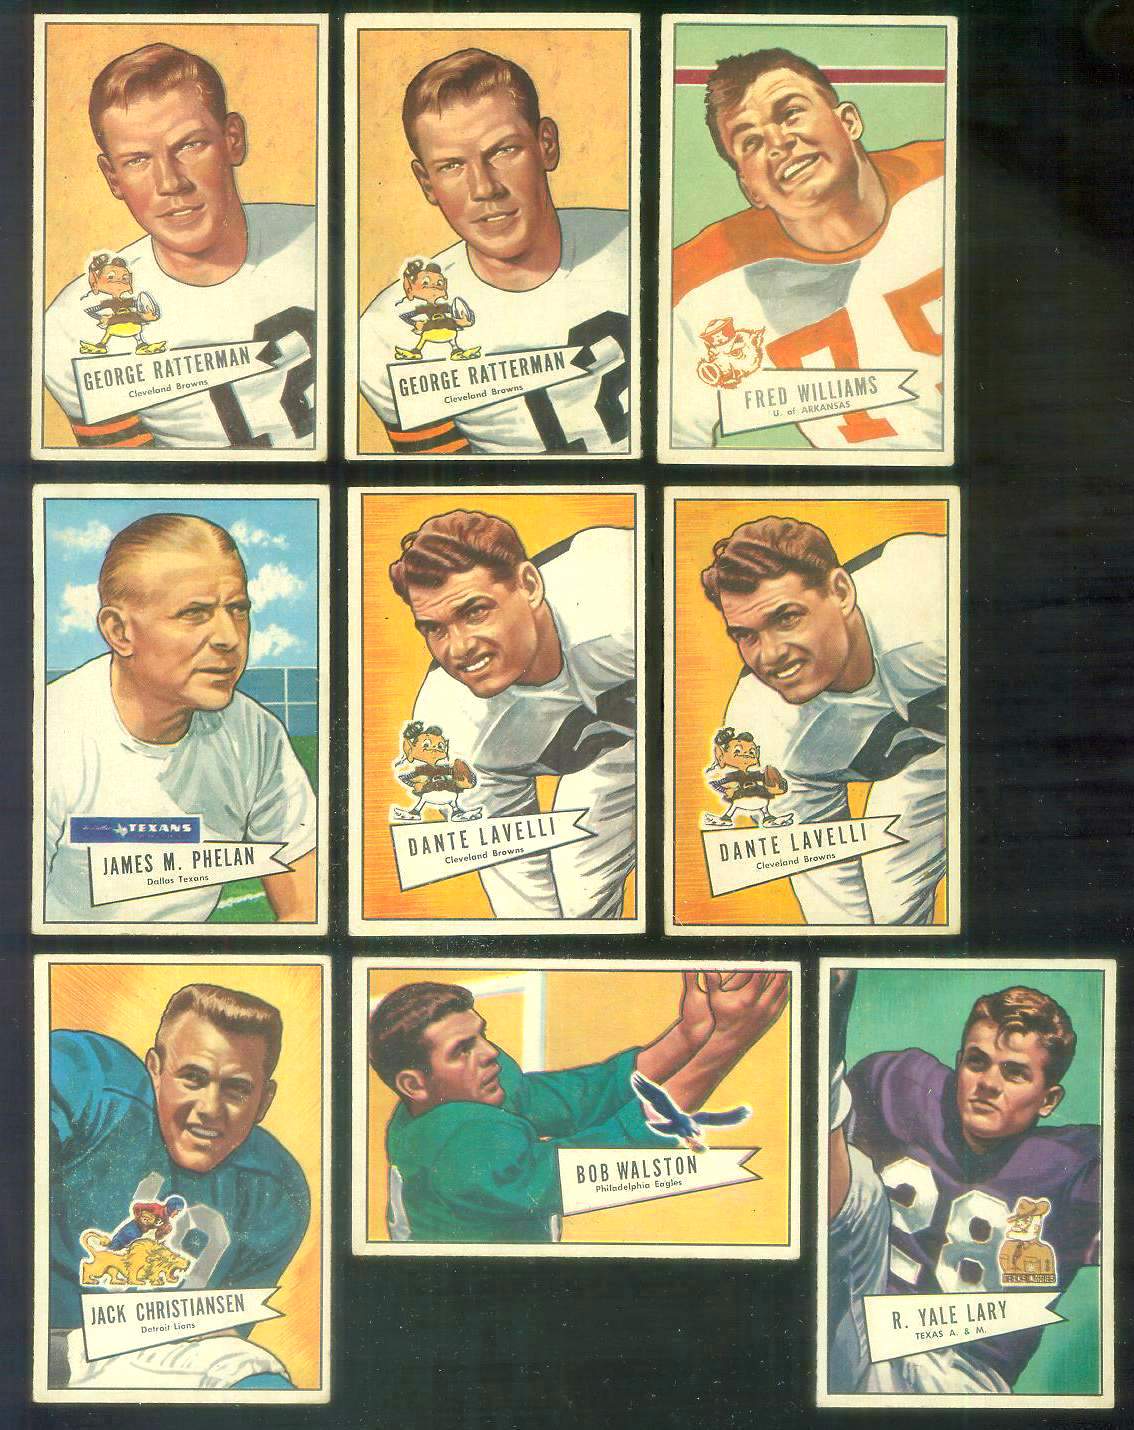 1952 Bowman Small FB #129 Jack Christiansen ROOKIE [#x] (Lions) Football cards value